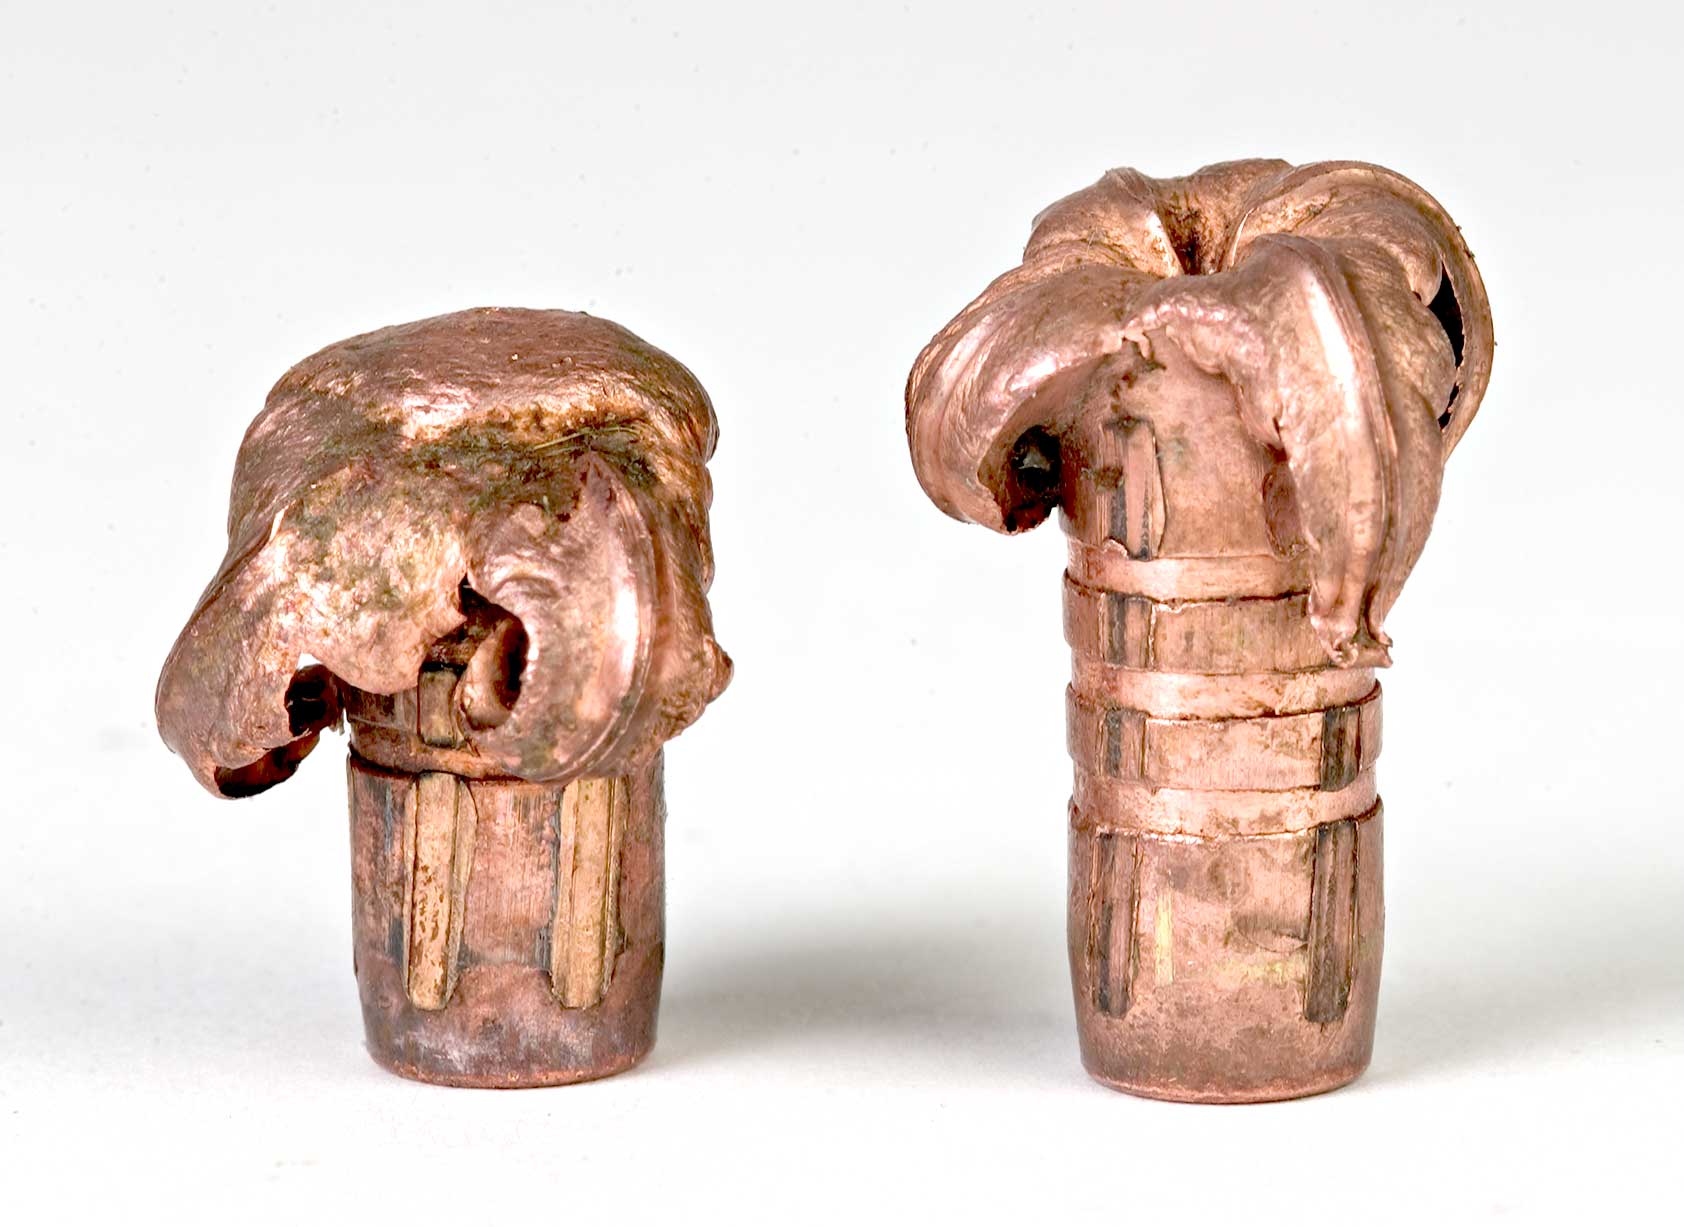 two copper bullets row deformed metal mushroom shape